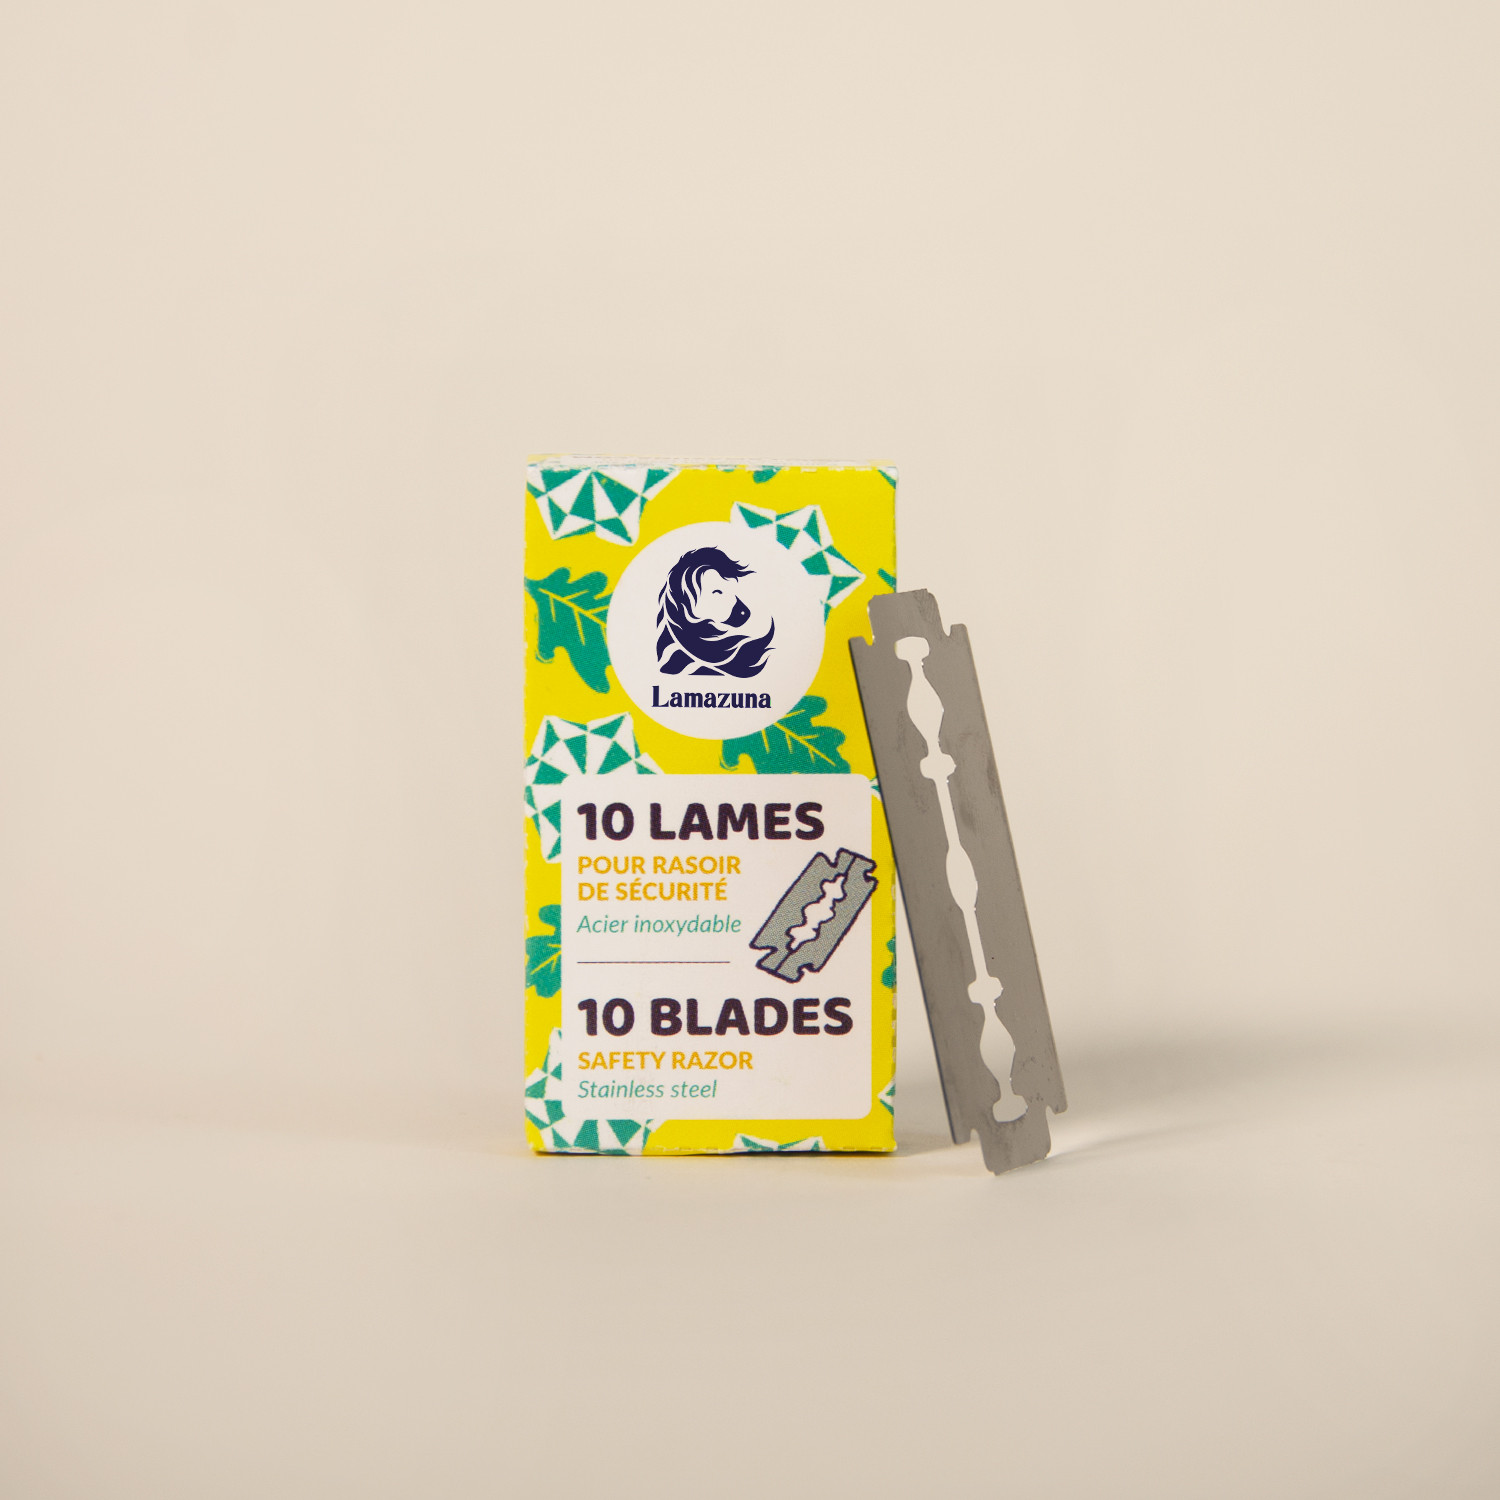 Blades for safety razor